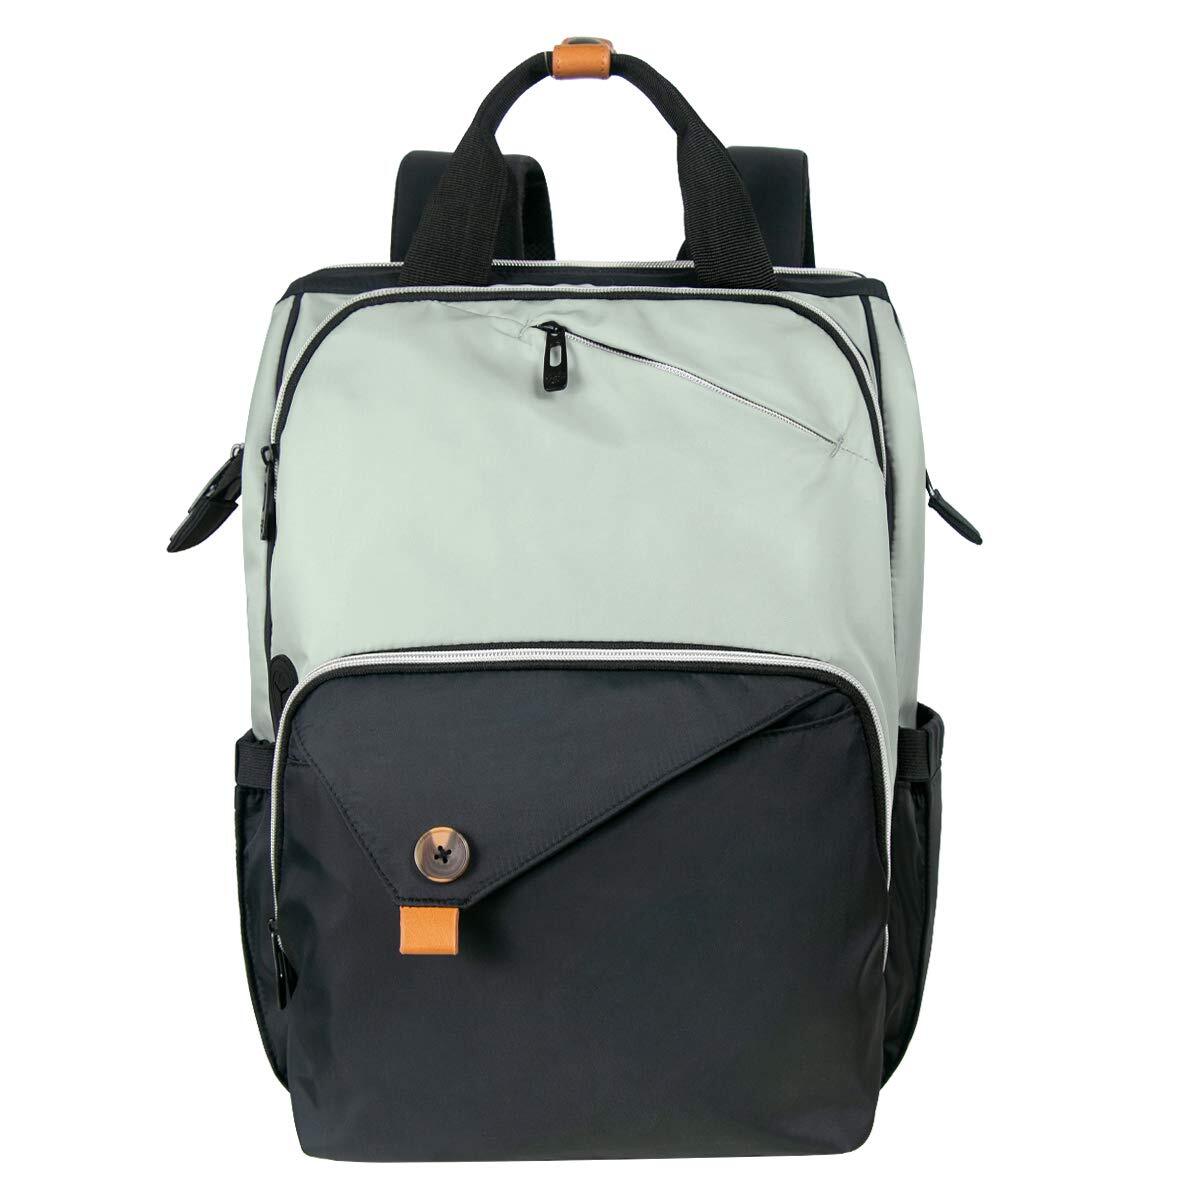 WATERPROOF BABY CHANGING Bag Backpack High Capacity Nappy Bags